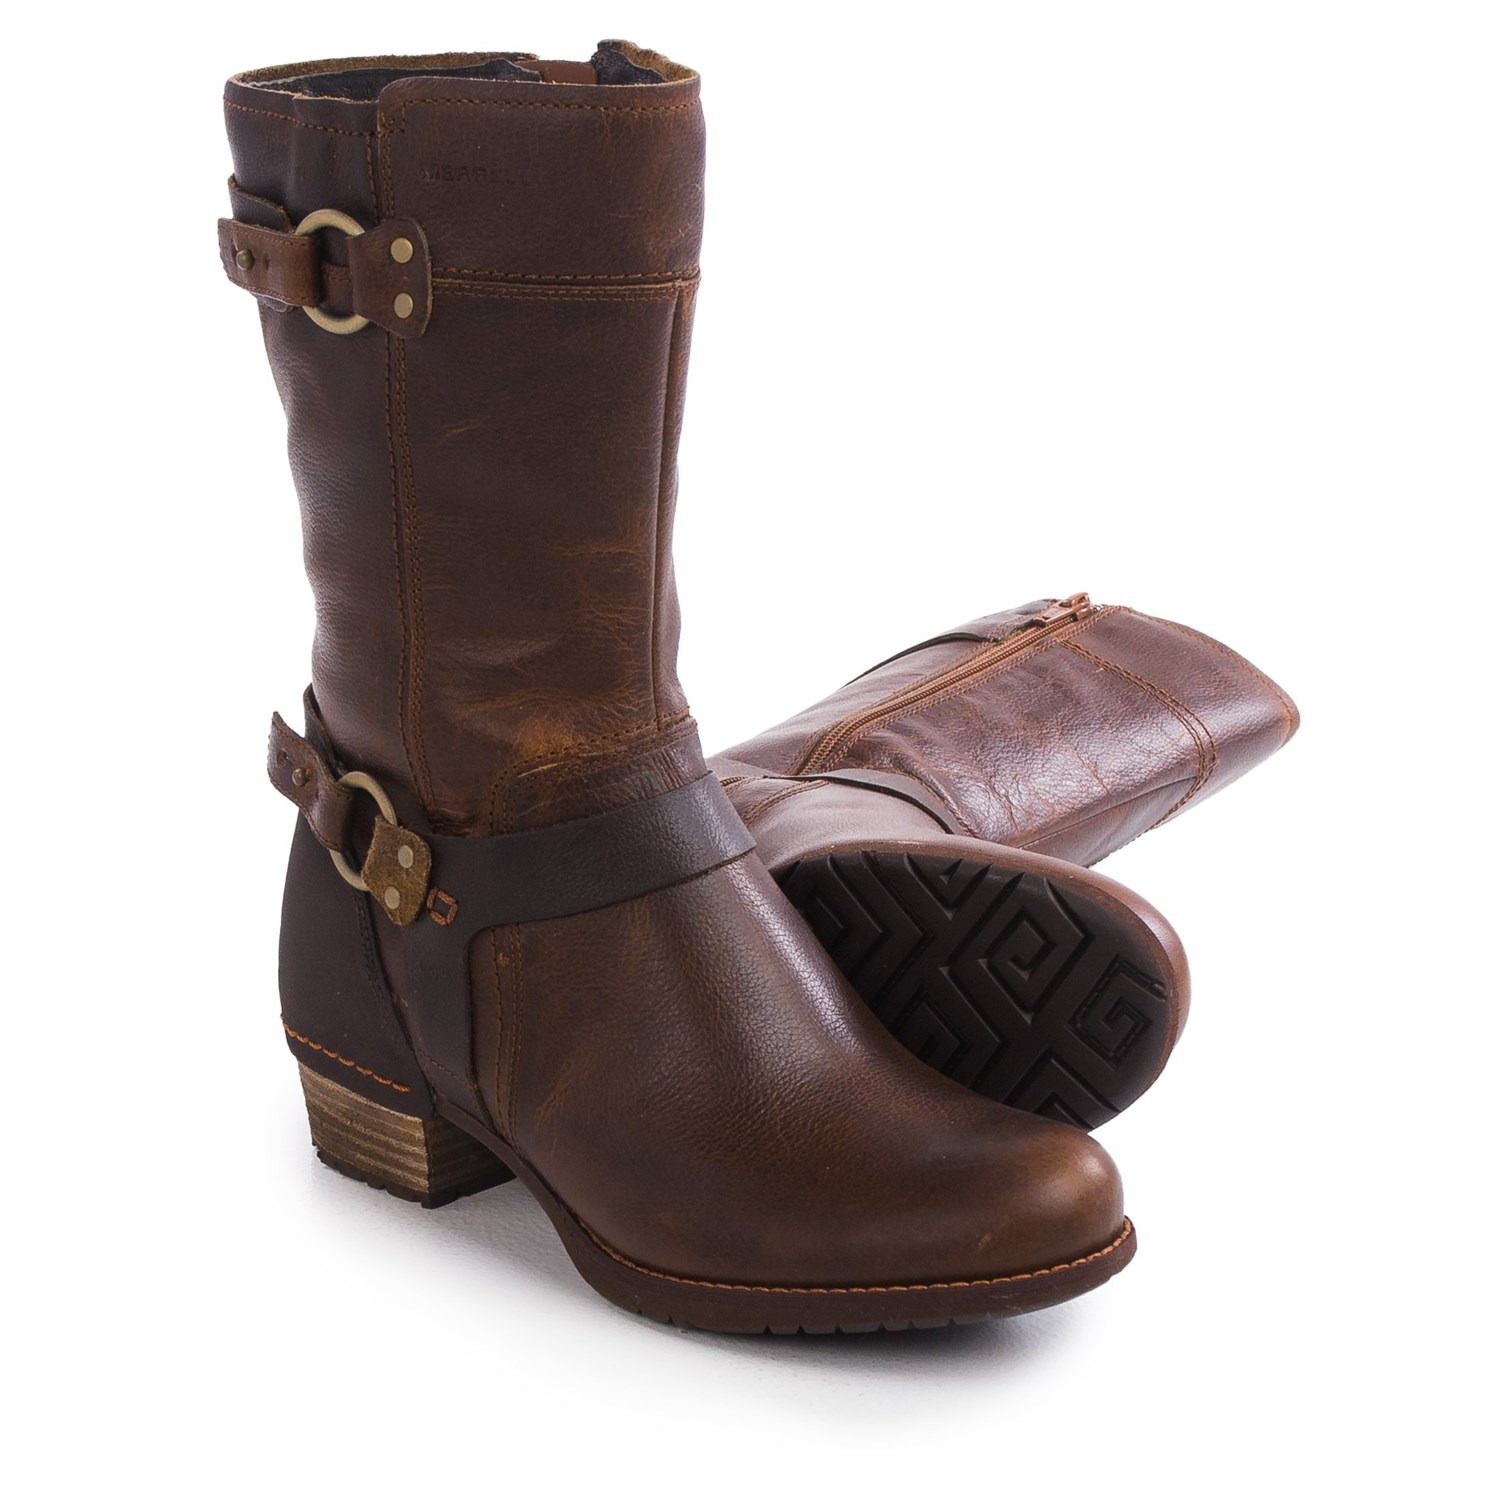 Merrell Shiloh Peak Boots – Leather (For Women)